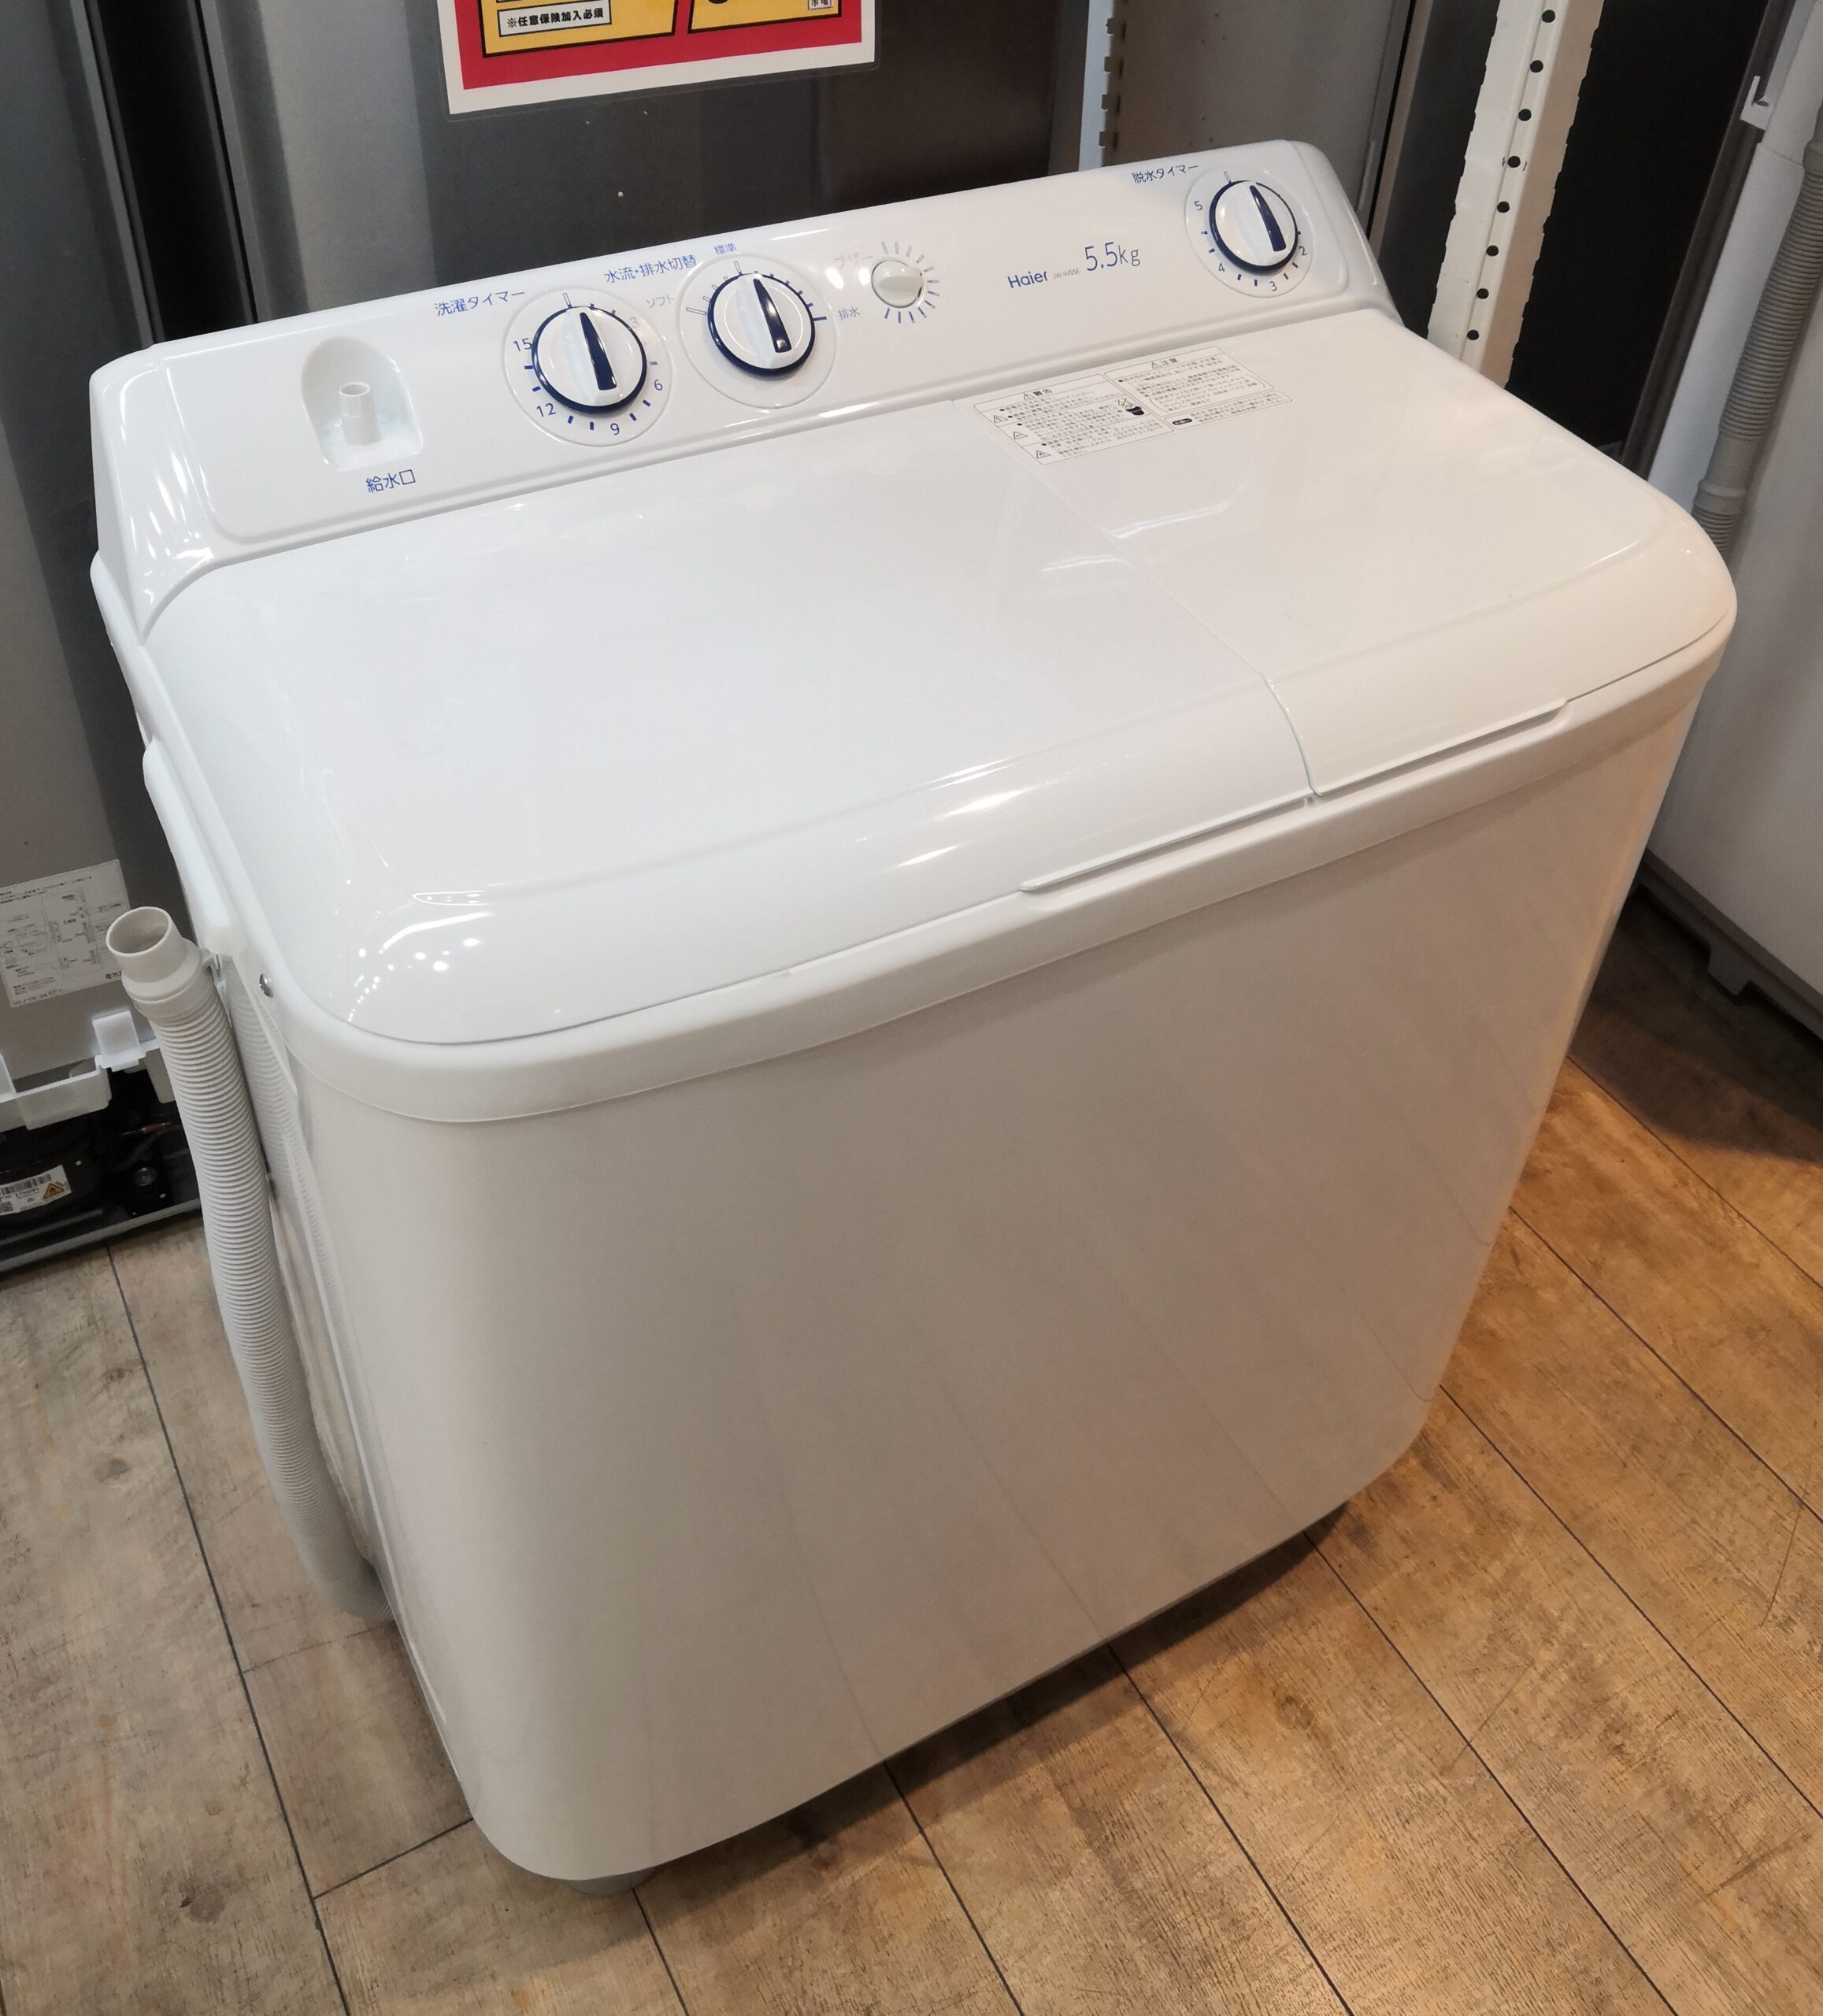 【Haier】 ハイアール 2槽式洗濯機 5.5㎏ JW-W55E